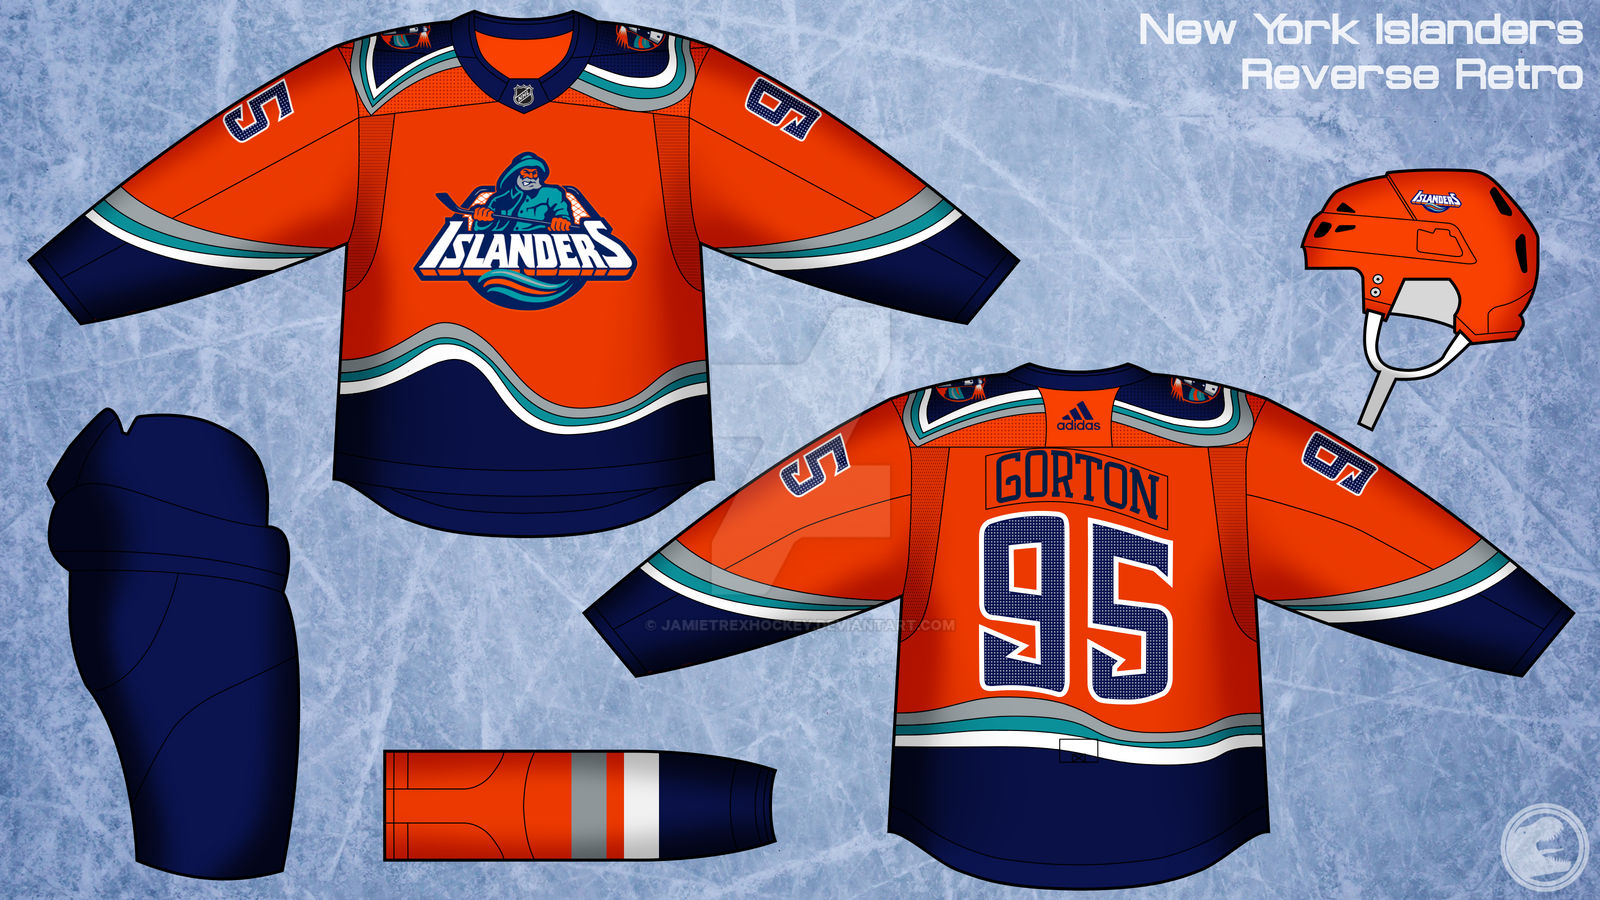 The New York Islanders 'Fisherman' jersey returns - The Hockey News